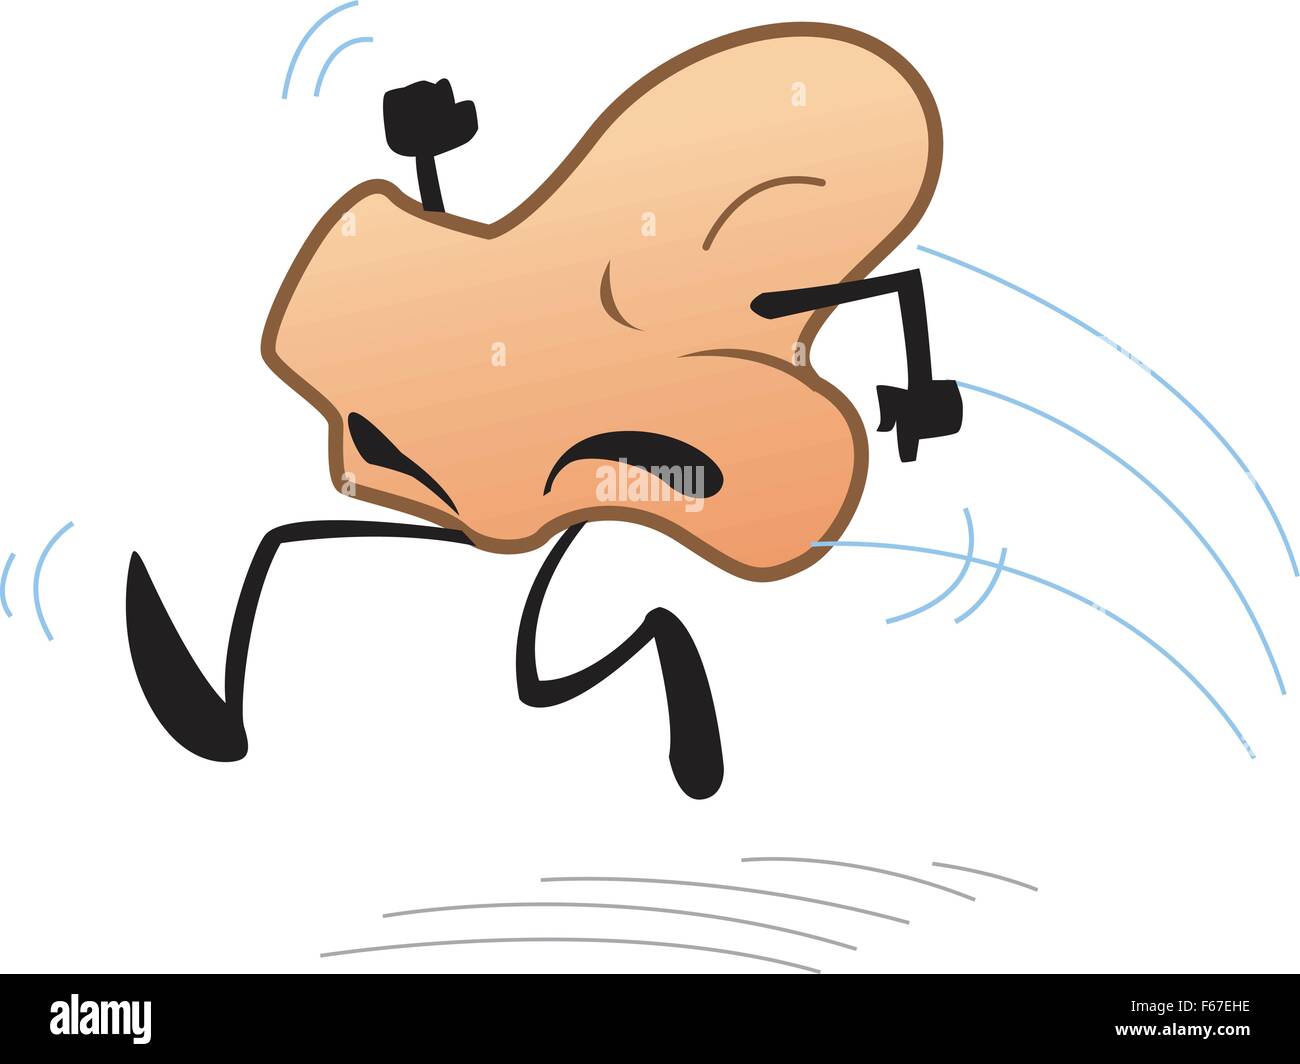 Joke Cartoon of Running Nose Stock Vector